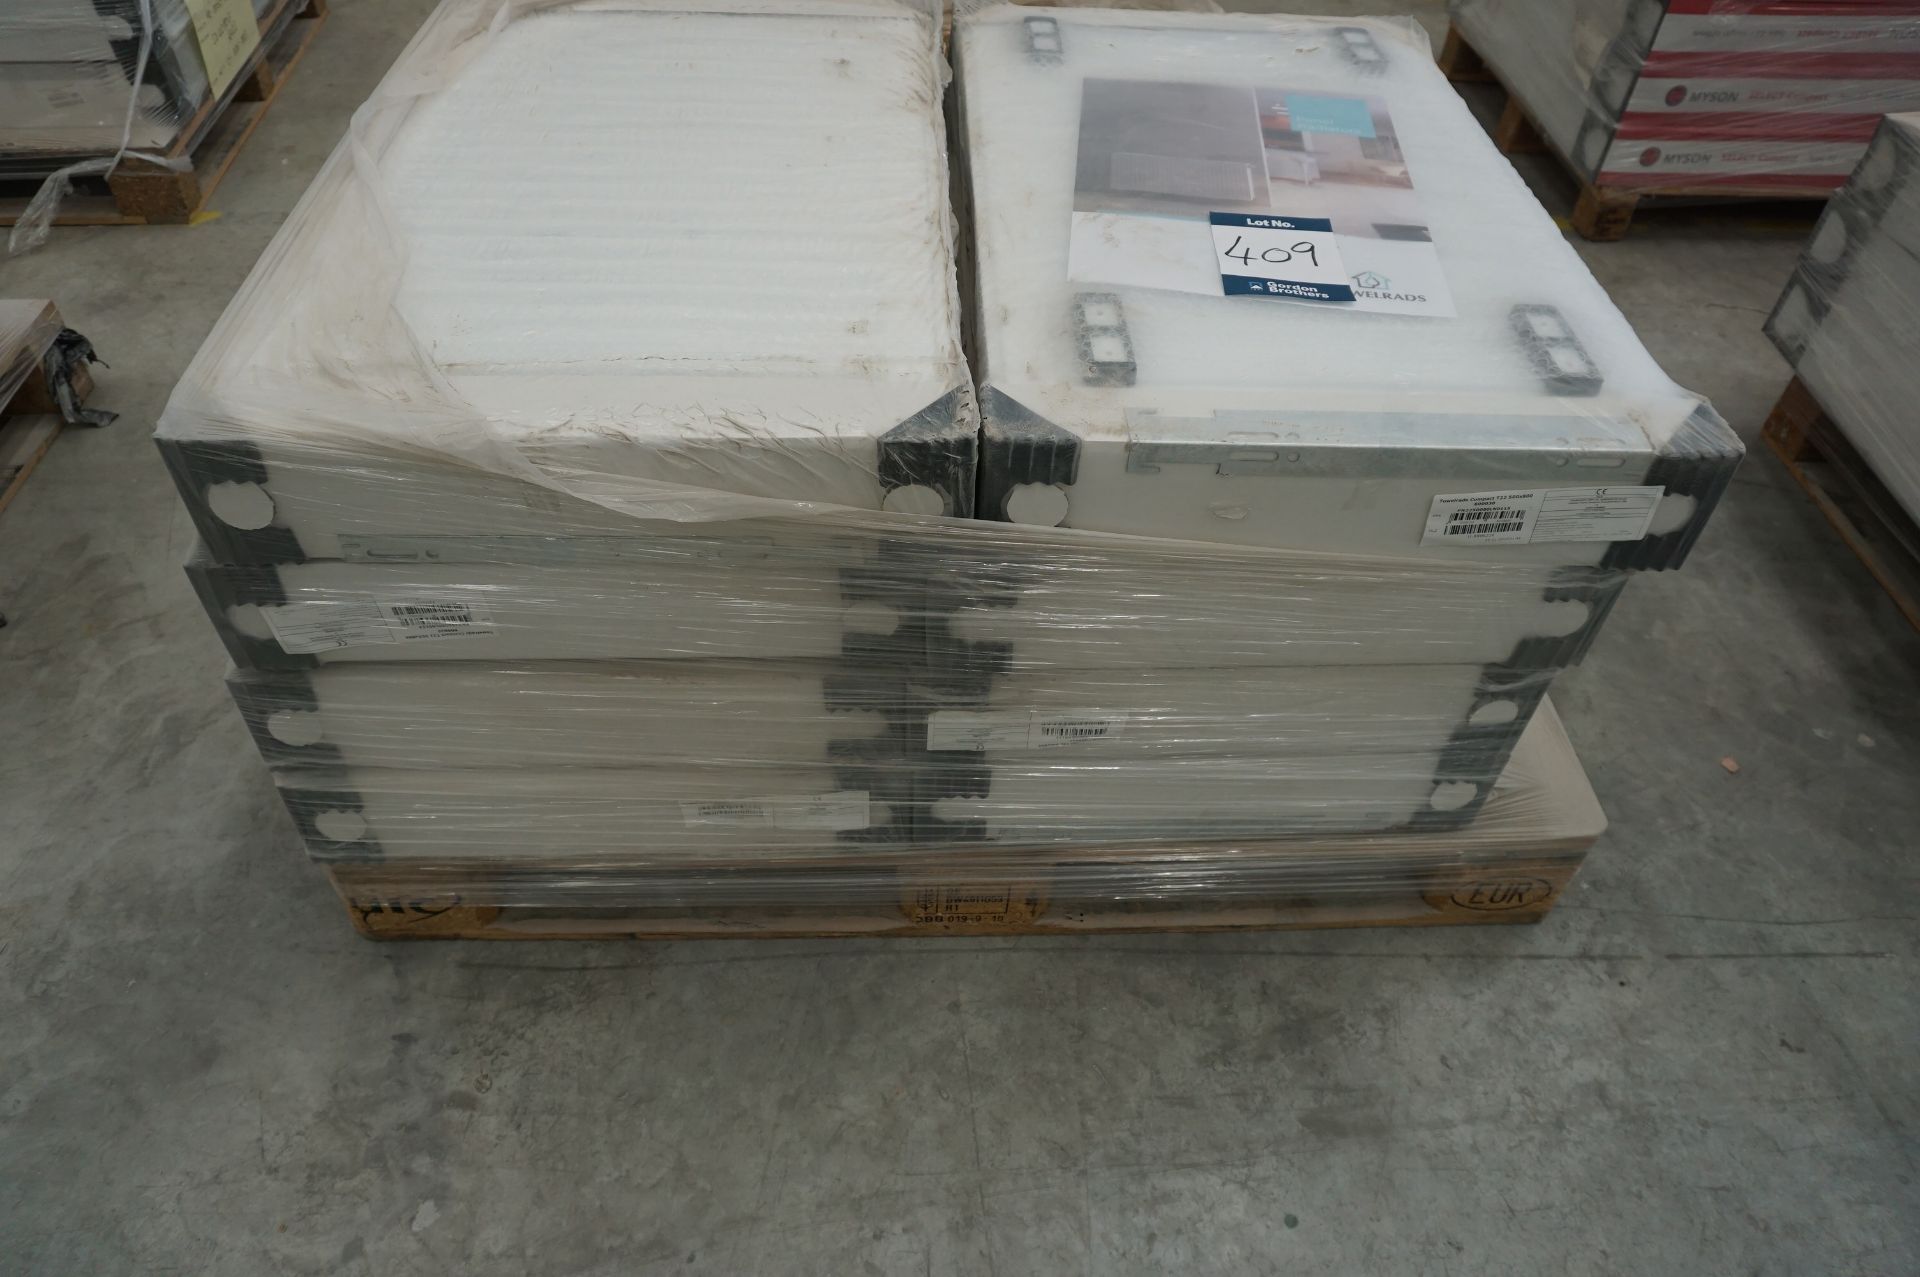 8x (no.) Towelrads, Compact T22 500 x 800mm white panel radiators, Part No. 2250080LN0113 - Image 2 of 4